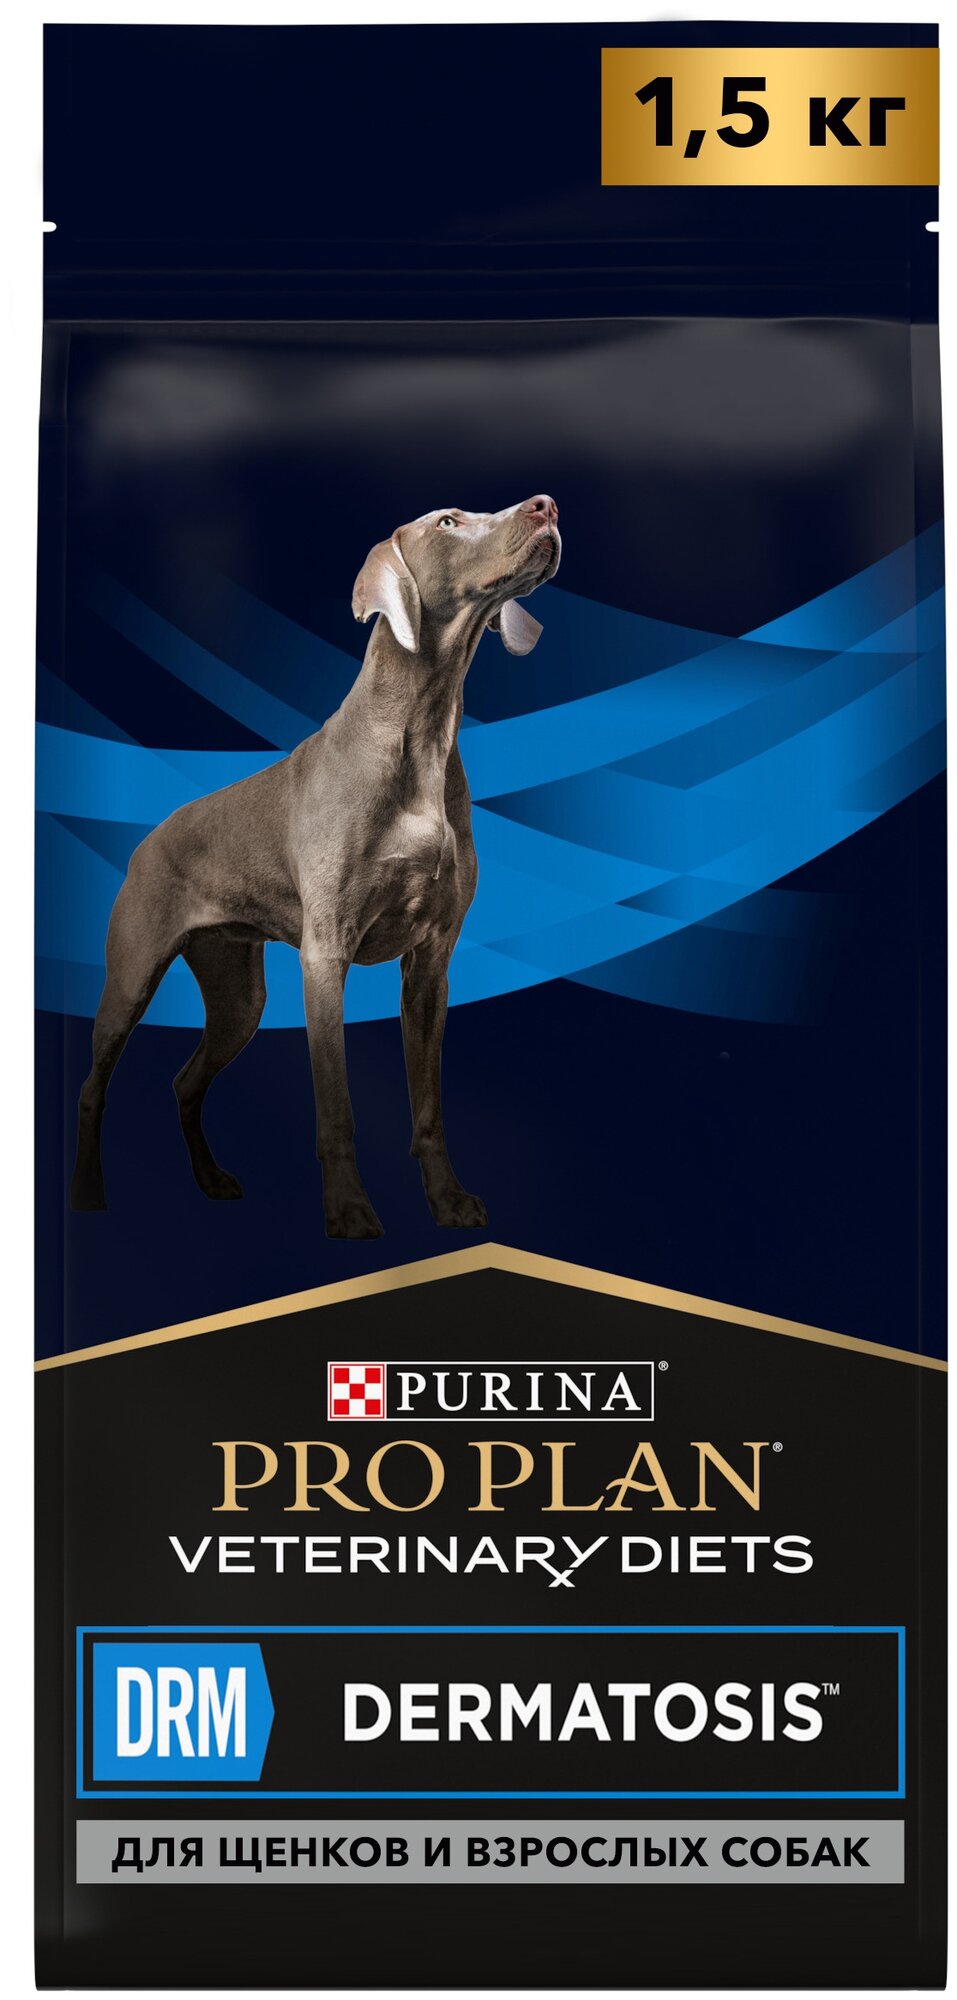   Purina Pro Plan Veterinary Diets DRM DERMATOSIS        1,5